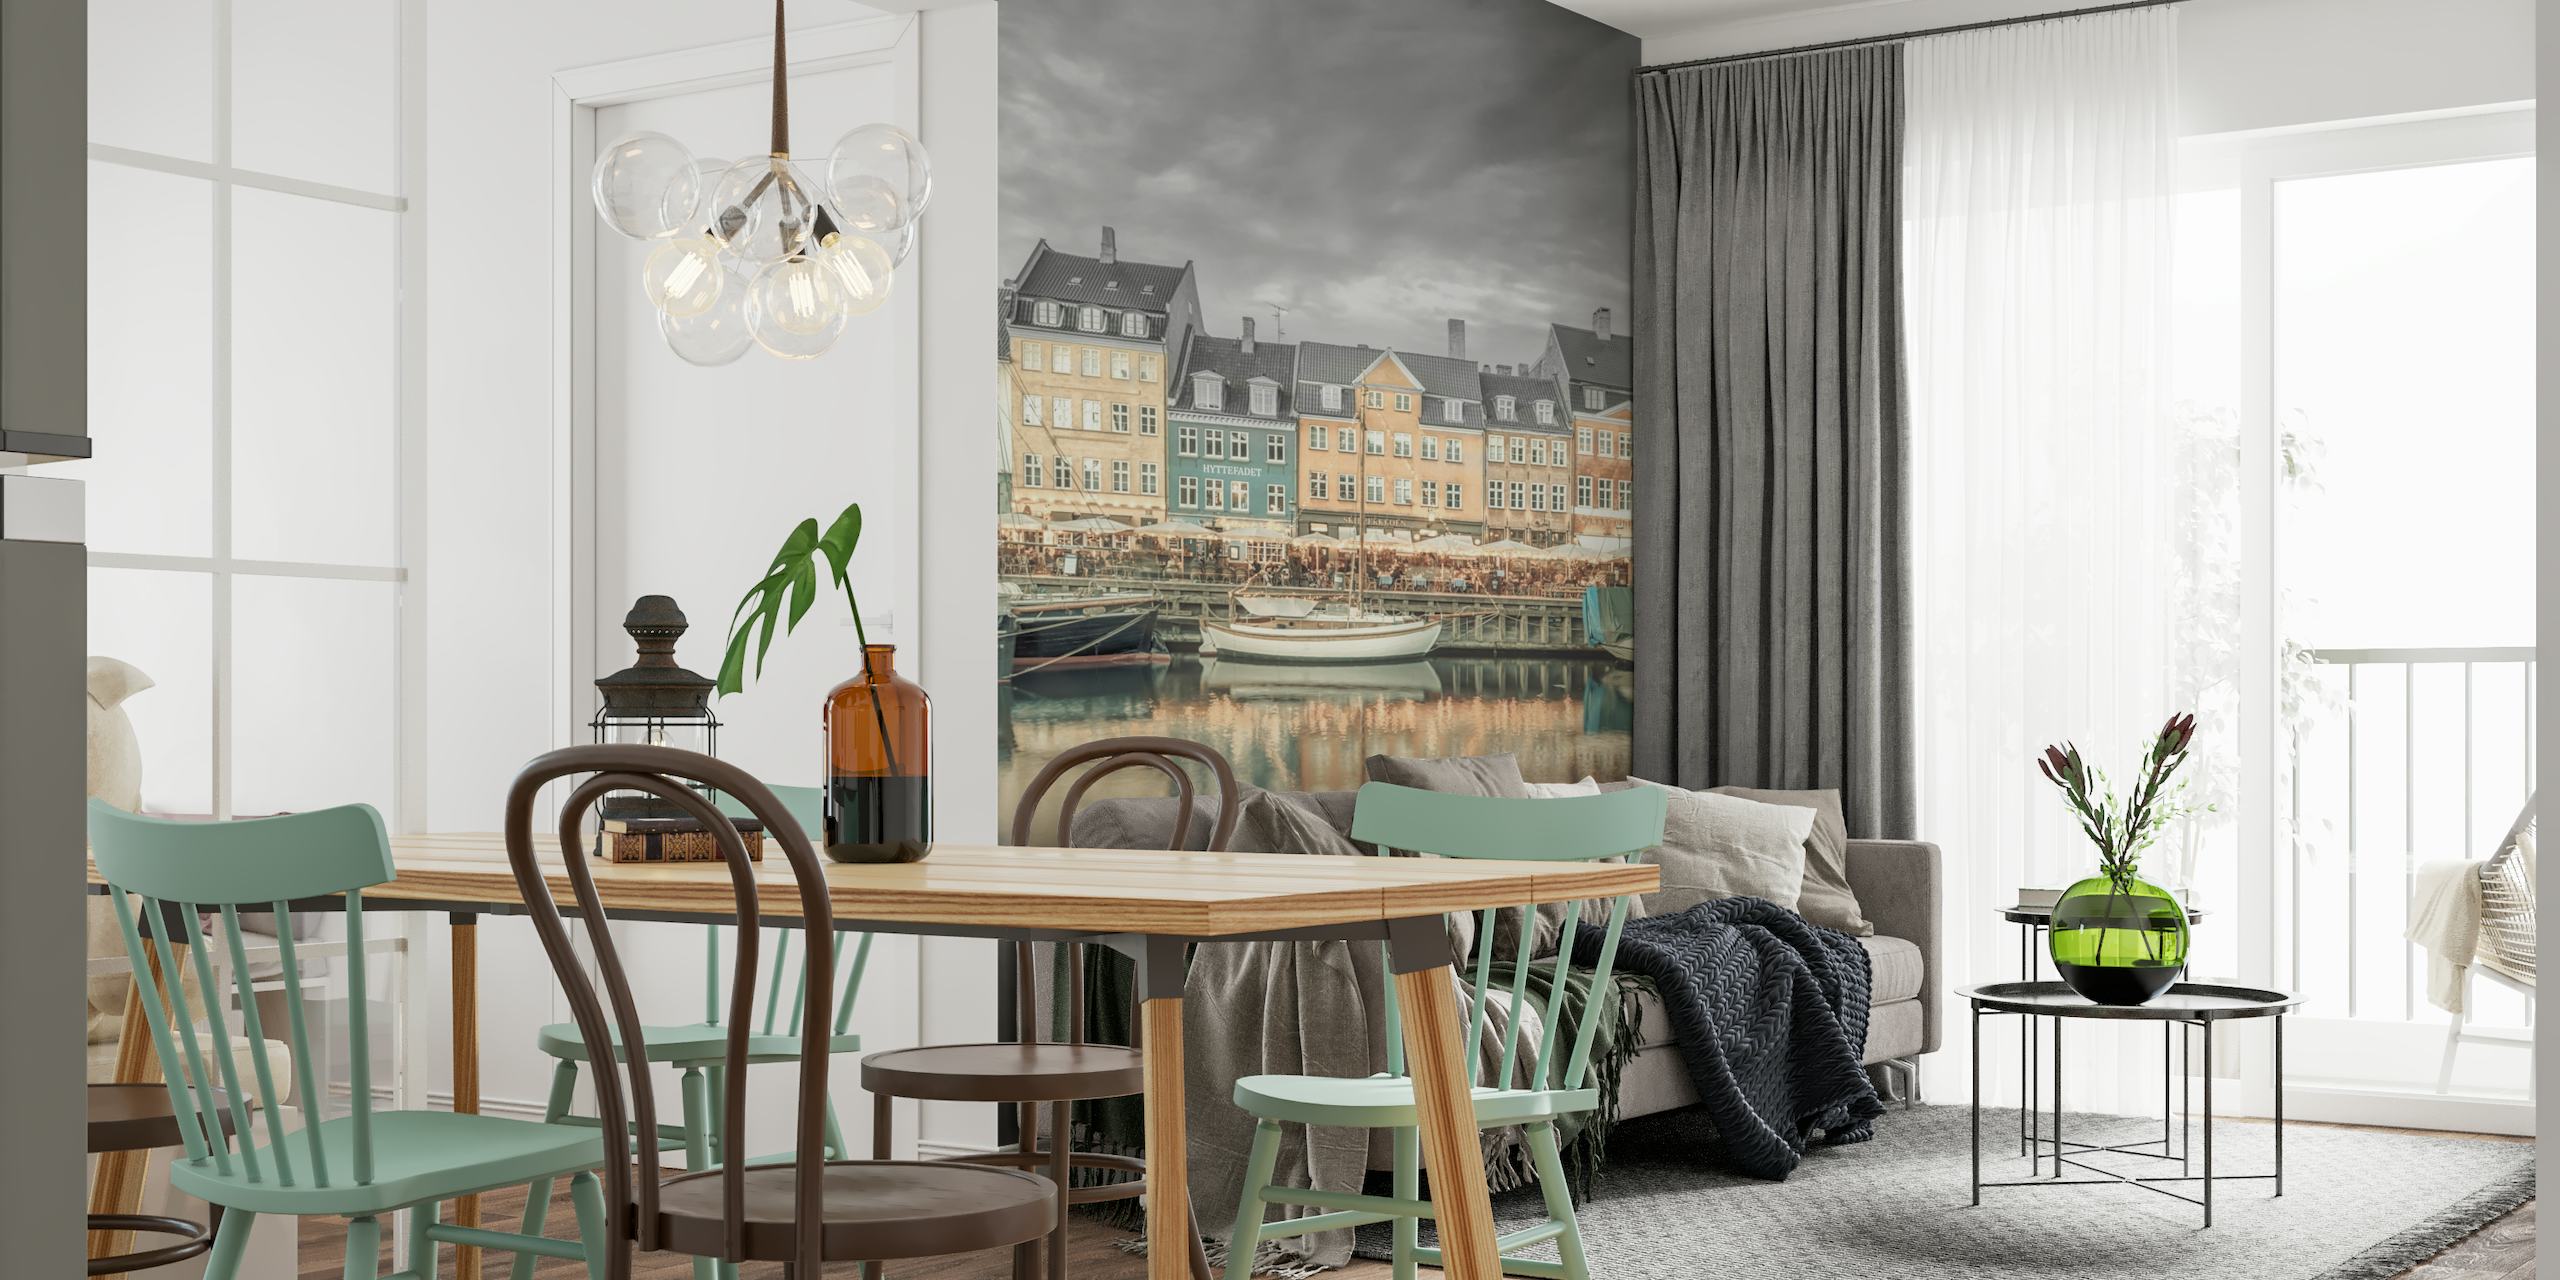 COPENHAGEN Nyhavn VINTAGE papel pintado